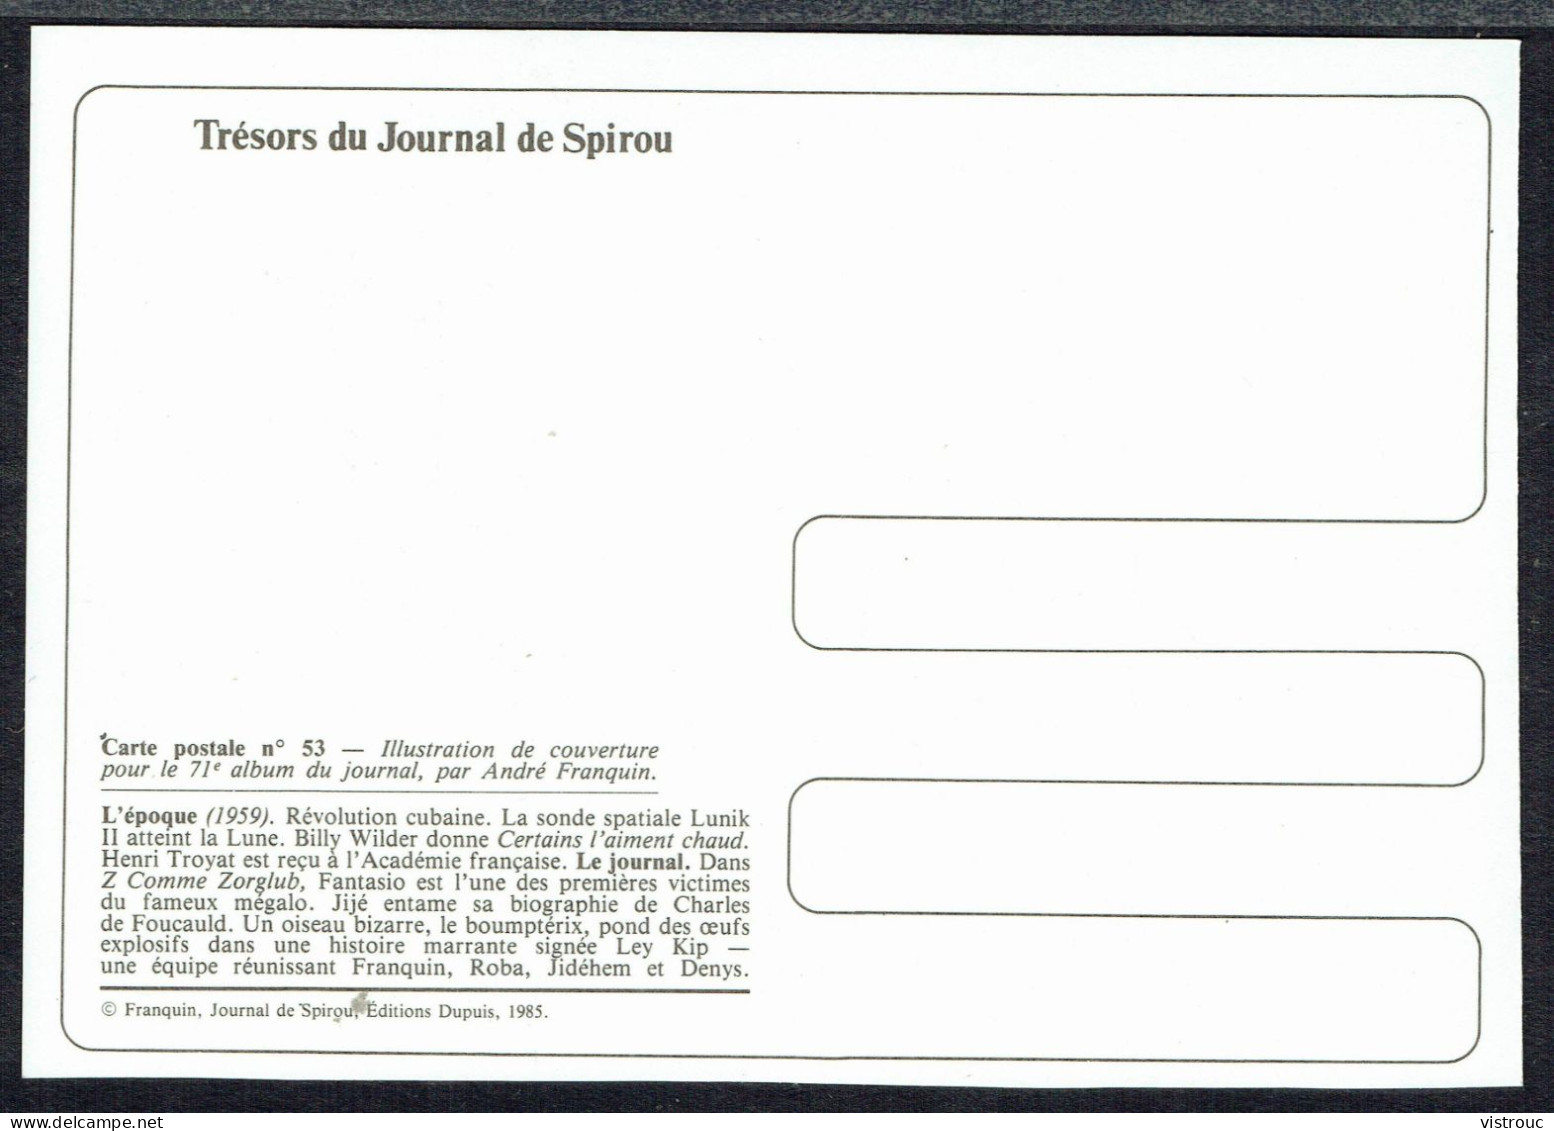 SPIROU - CP N° 53 : Illustration Couverture Album N° 71 De FRANQUIN - Non Circulé - Not Circulated - Ed. DUPUIS - 1985. - Fumetti